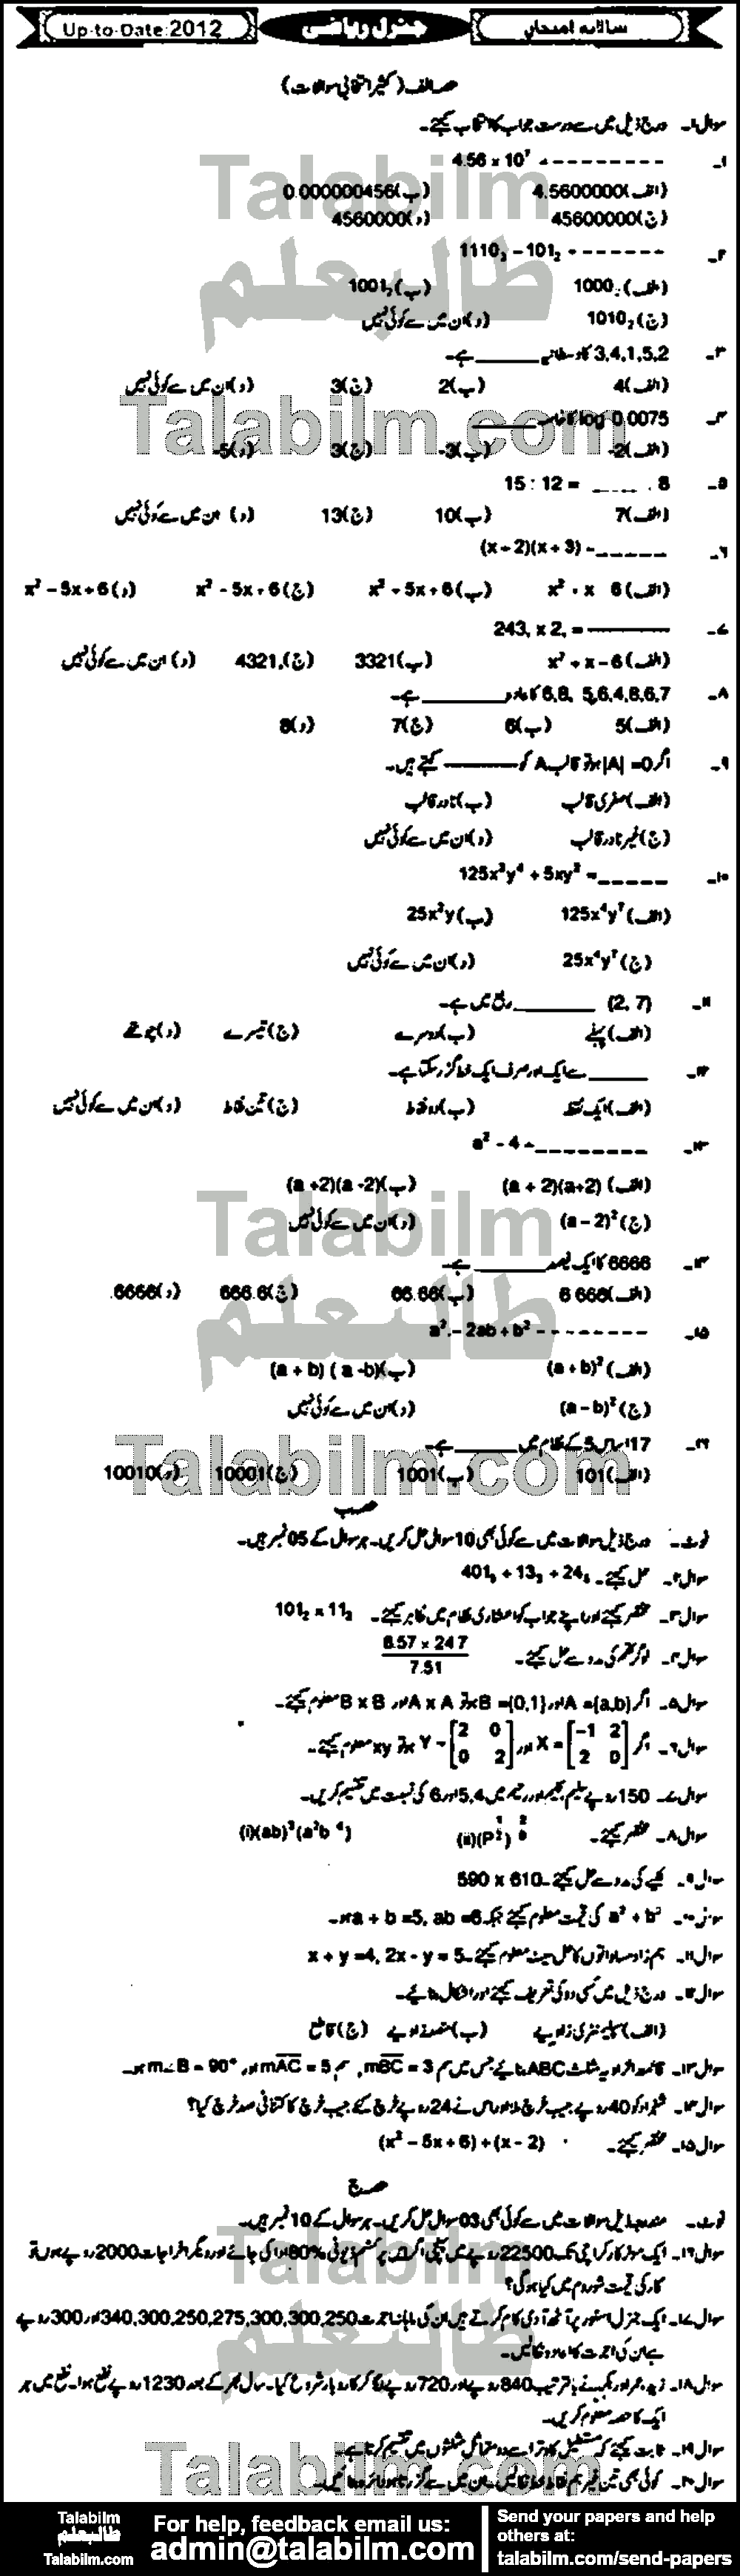 General Math 0 past paper for Urdu Medium 2012 Group-I